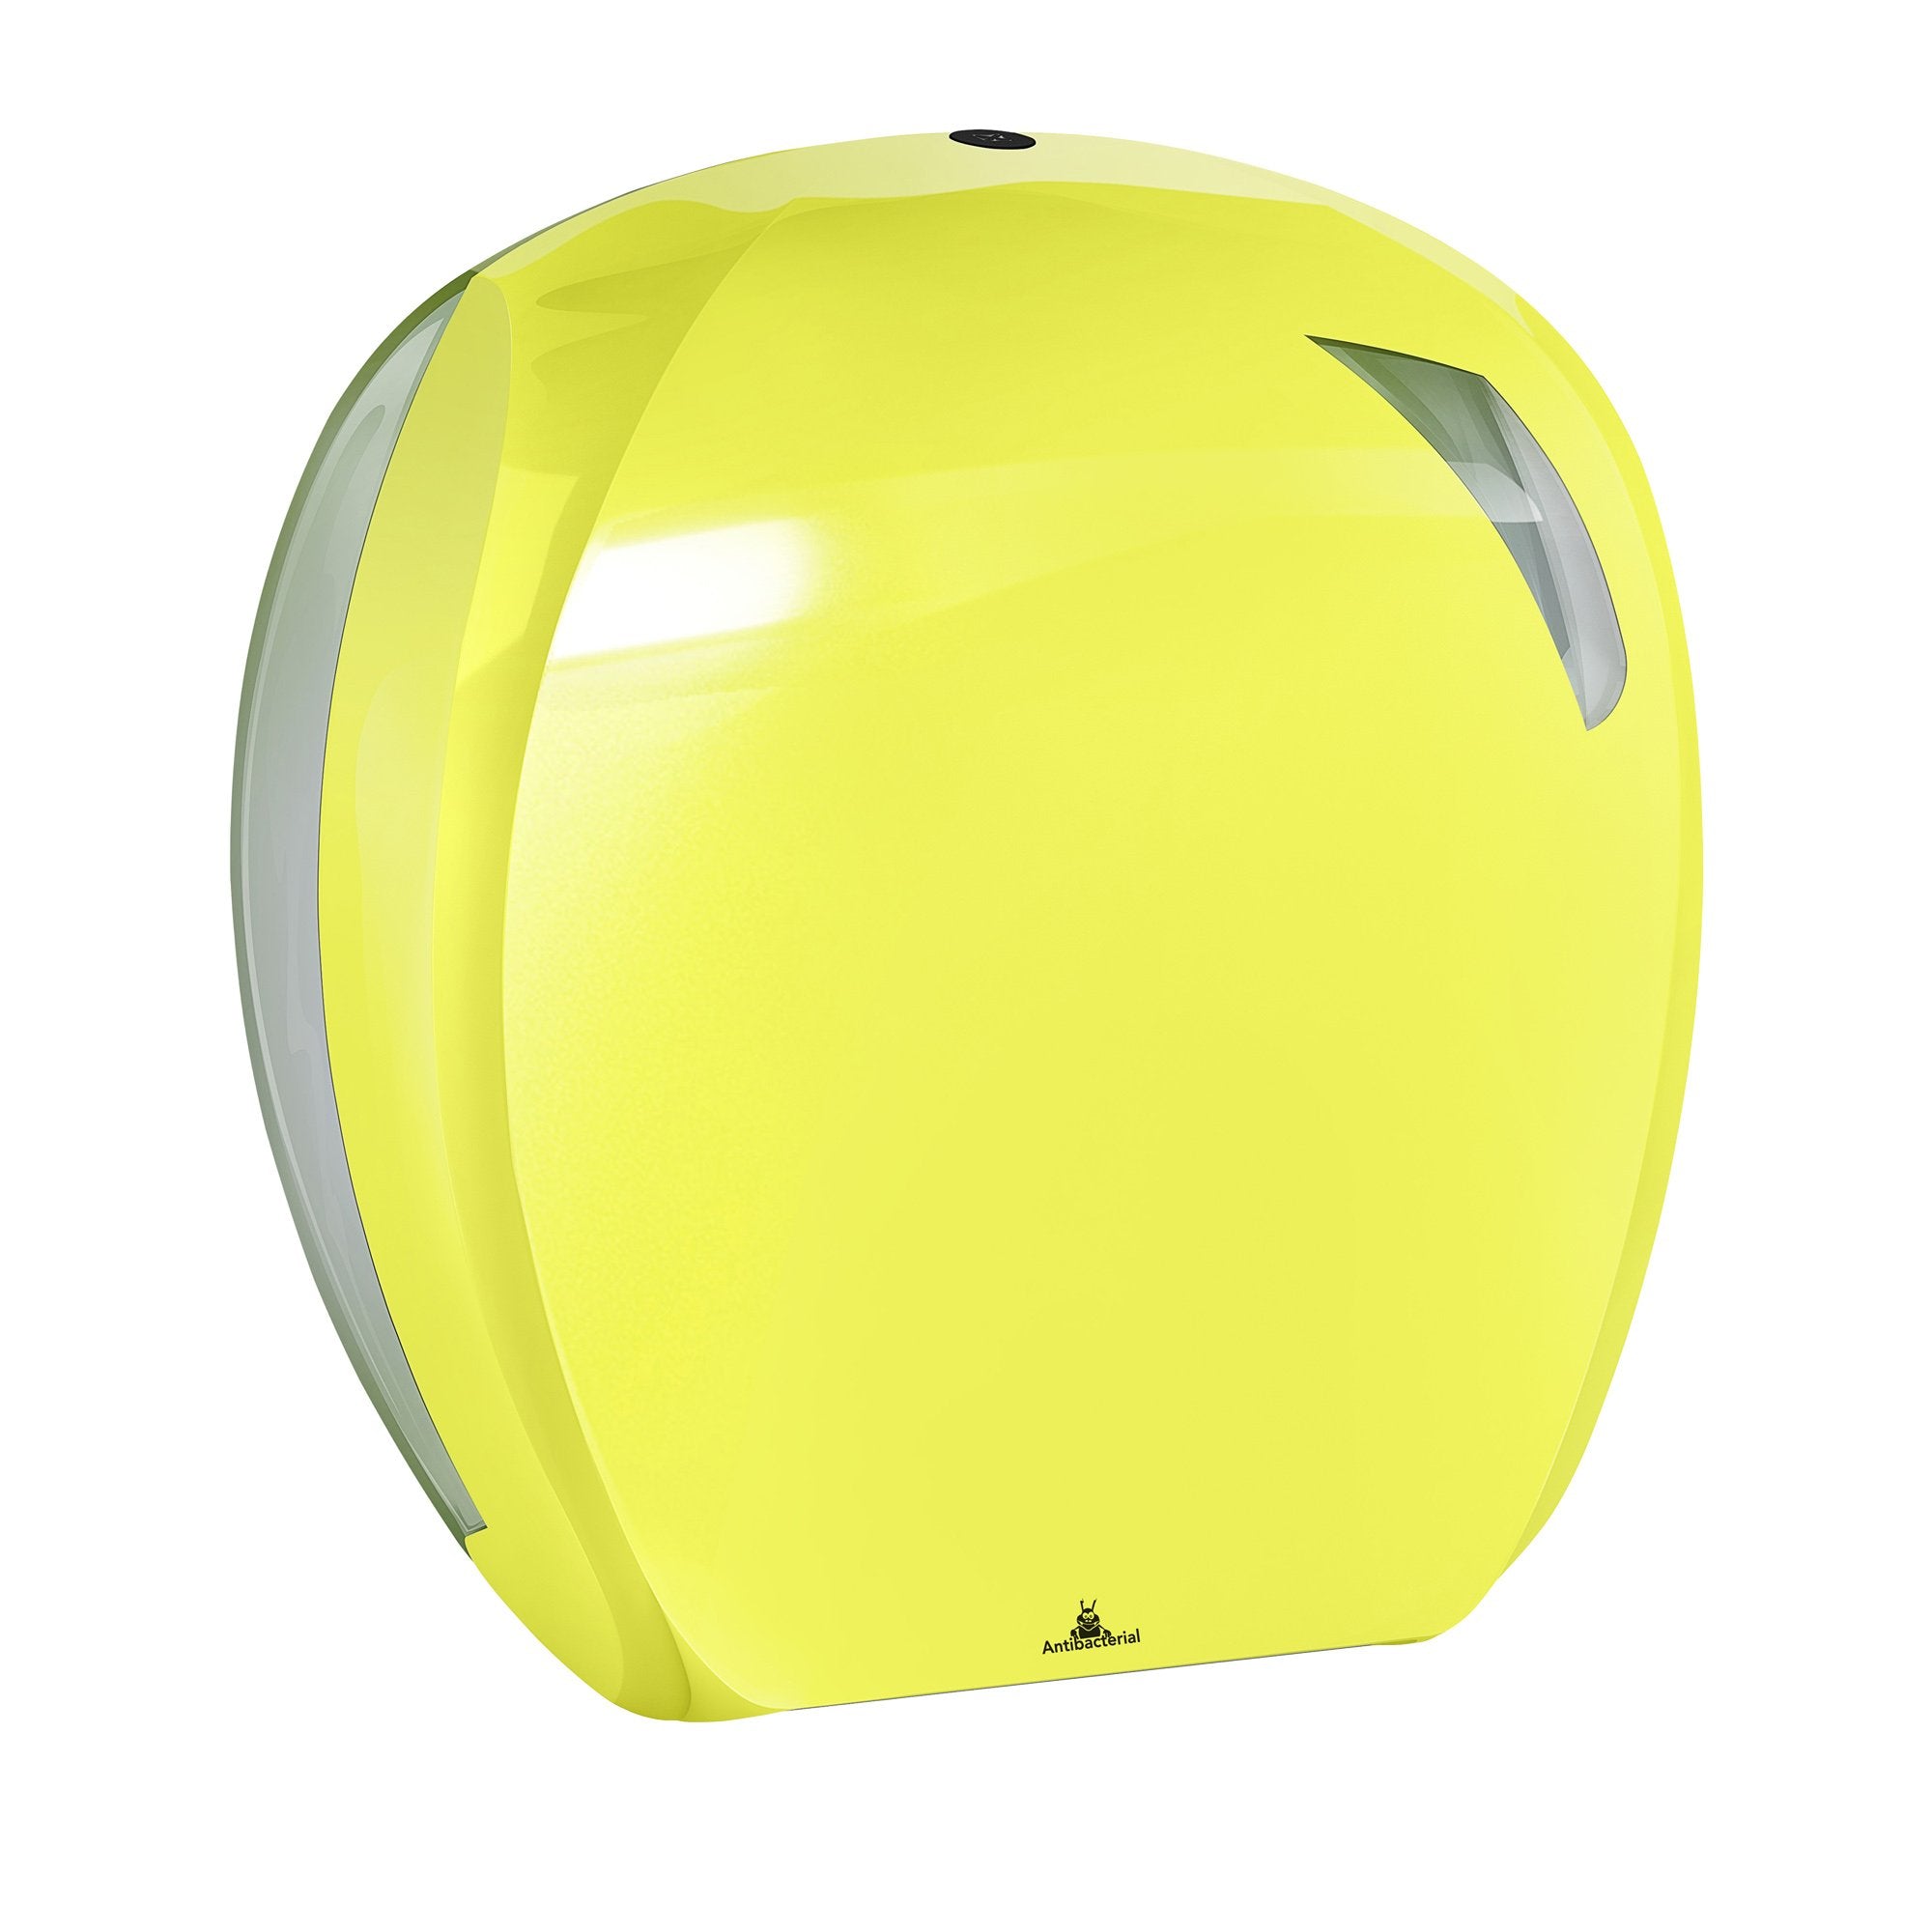 mar-plast-dispenser-carta-igienica-mini-jumbo-skin-rotolo-d-24cm-giallo-fluo